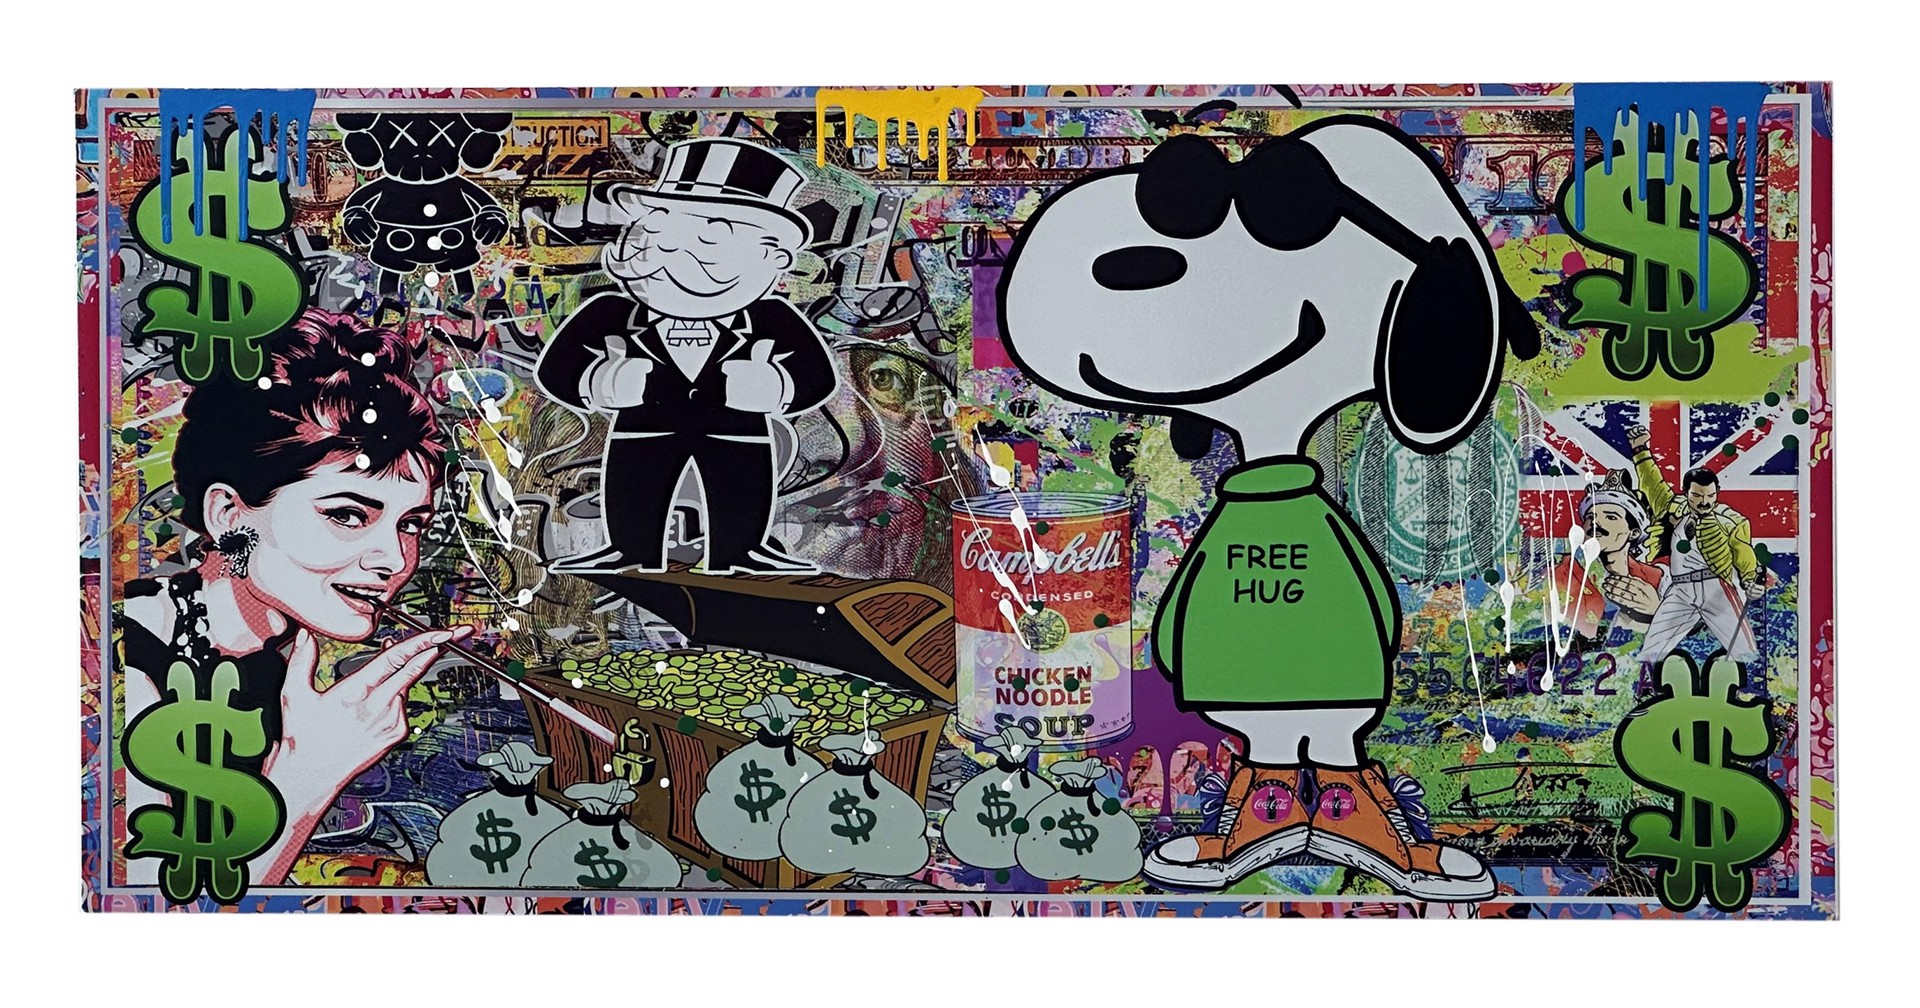 "Free Hug Snoopy" by Jozza